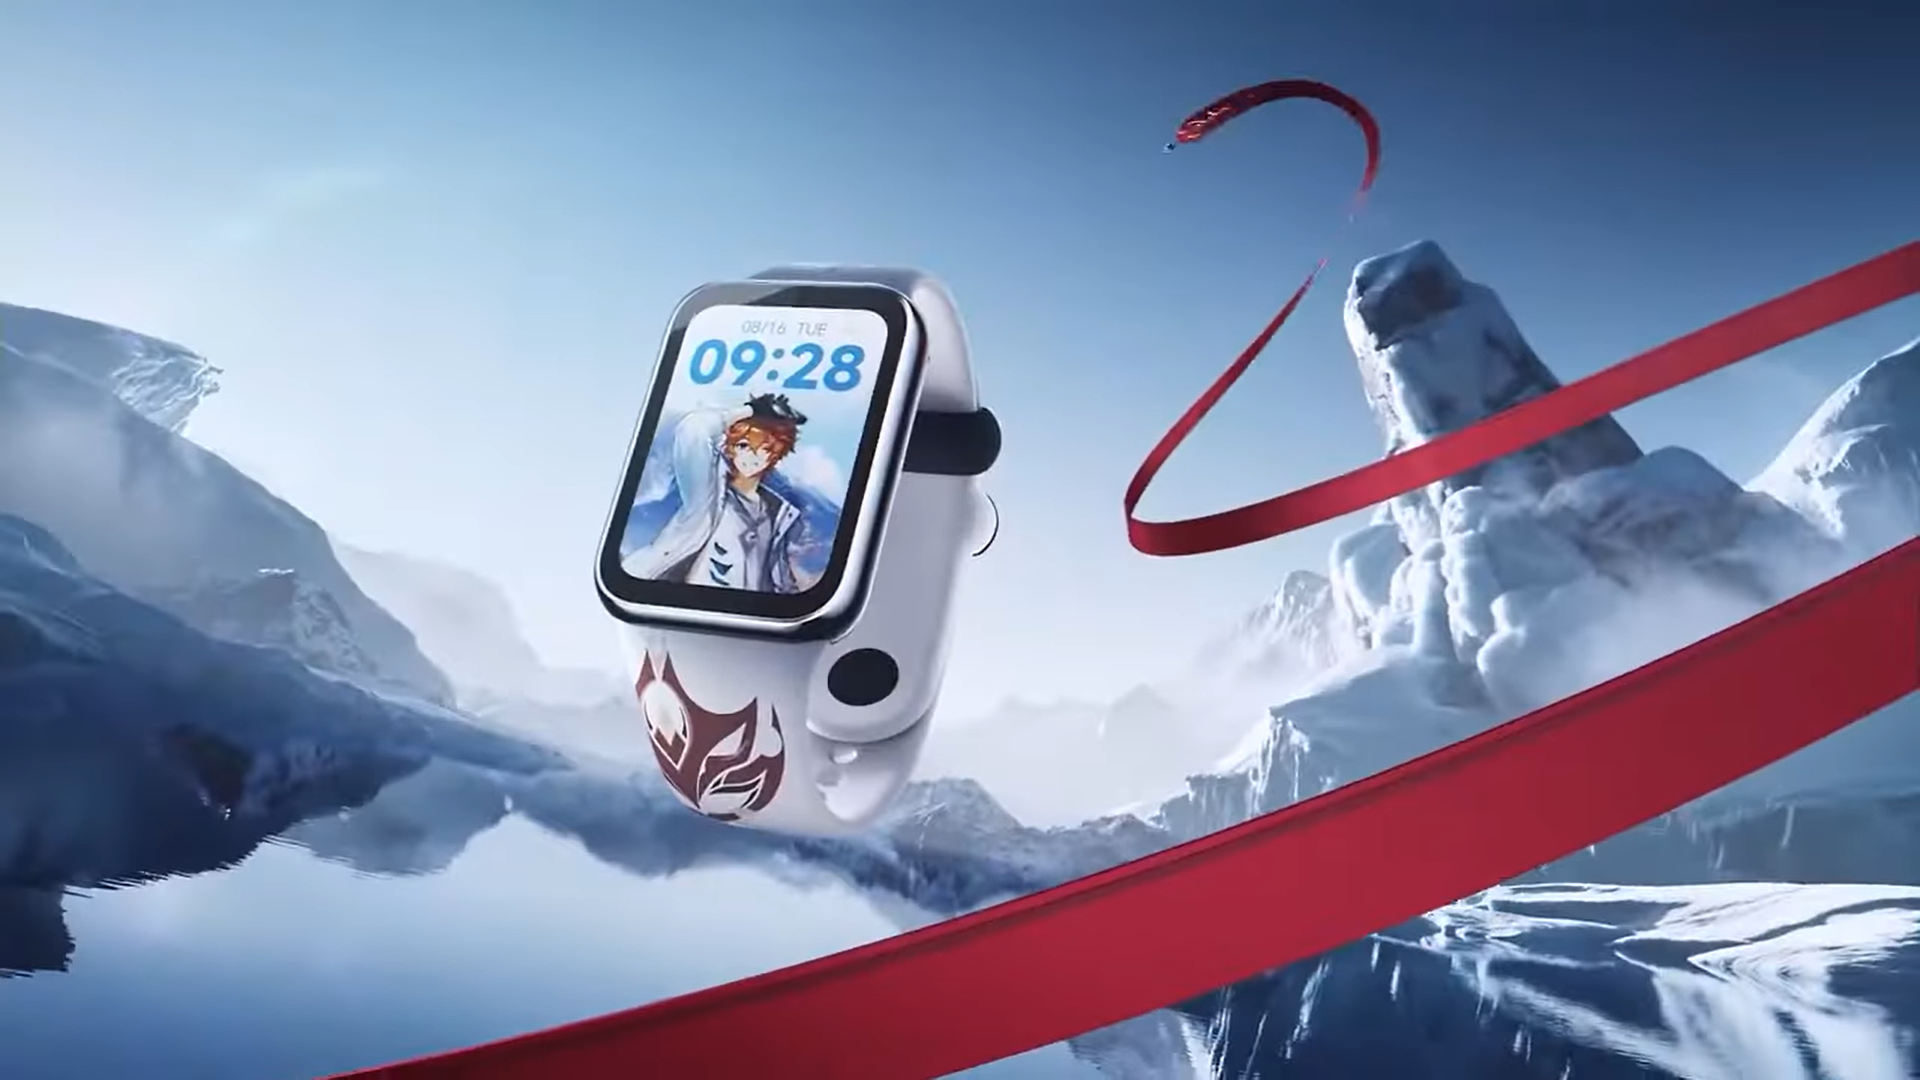 Xiaomi Smart Band 8 Pro Genshin Impact Edition launched in China